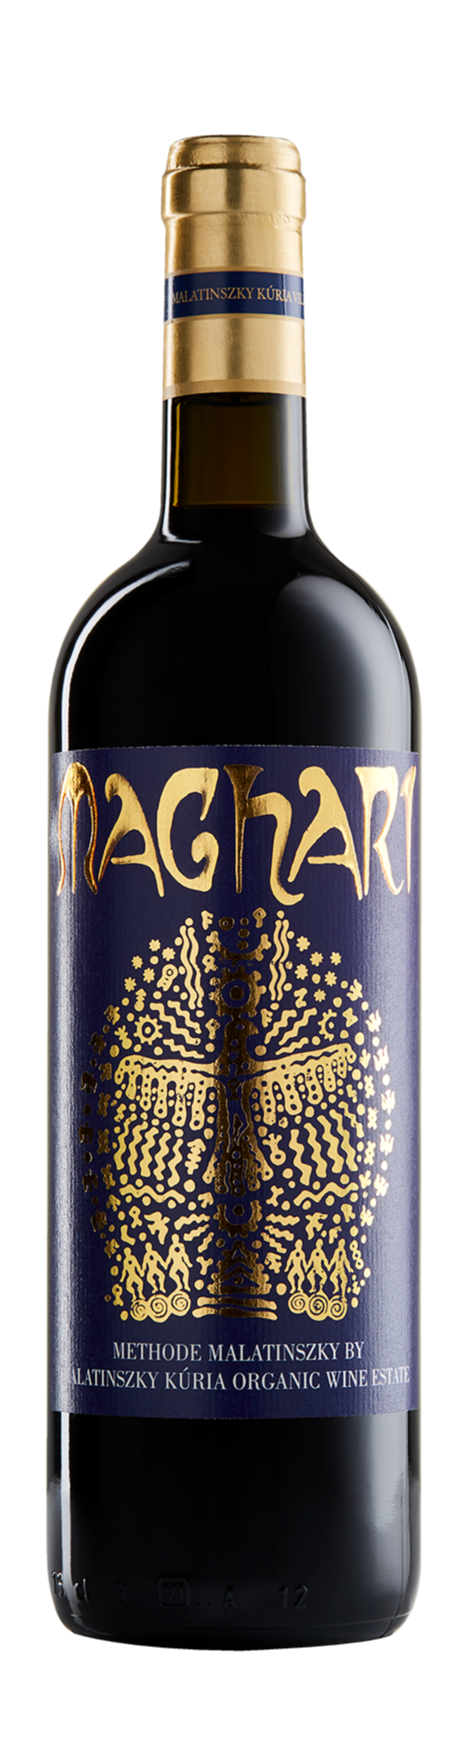 Maghari / Methode Malatinszky, Bor - Malatinszky Kúria Organic Wine Estate